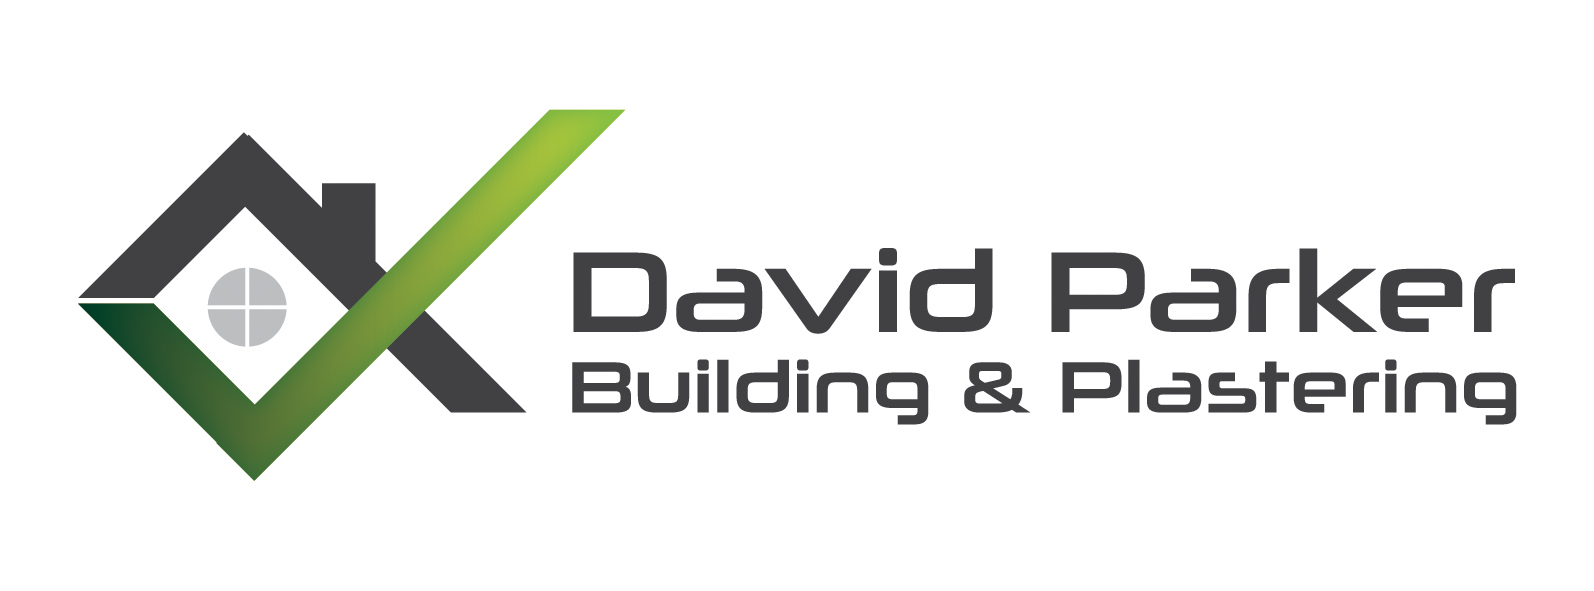 David Parker Plastering and Building Morecambe